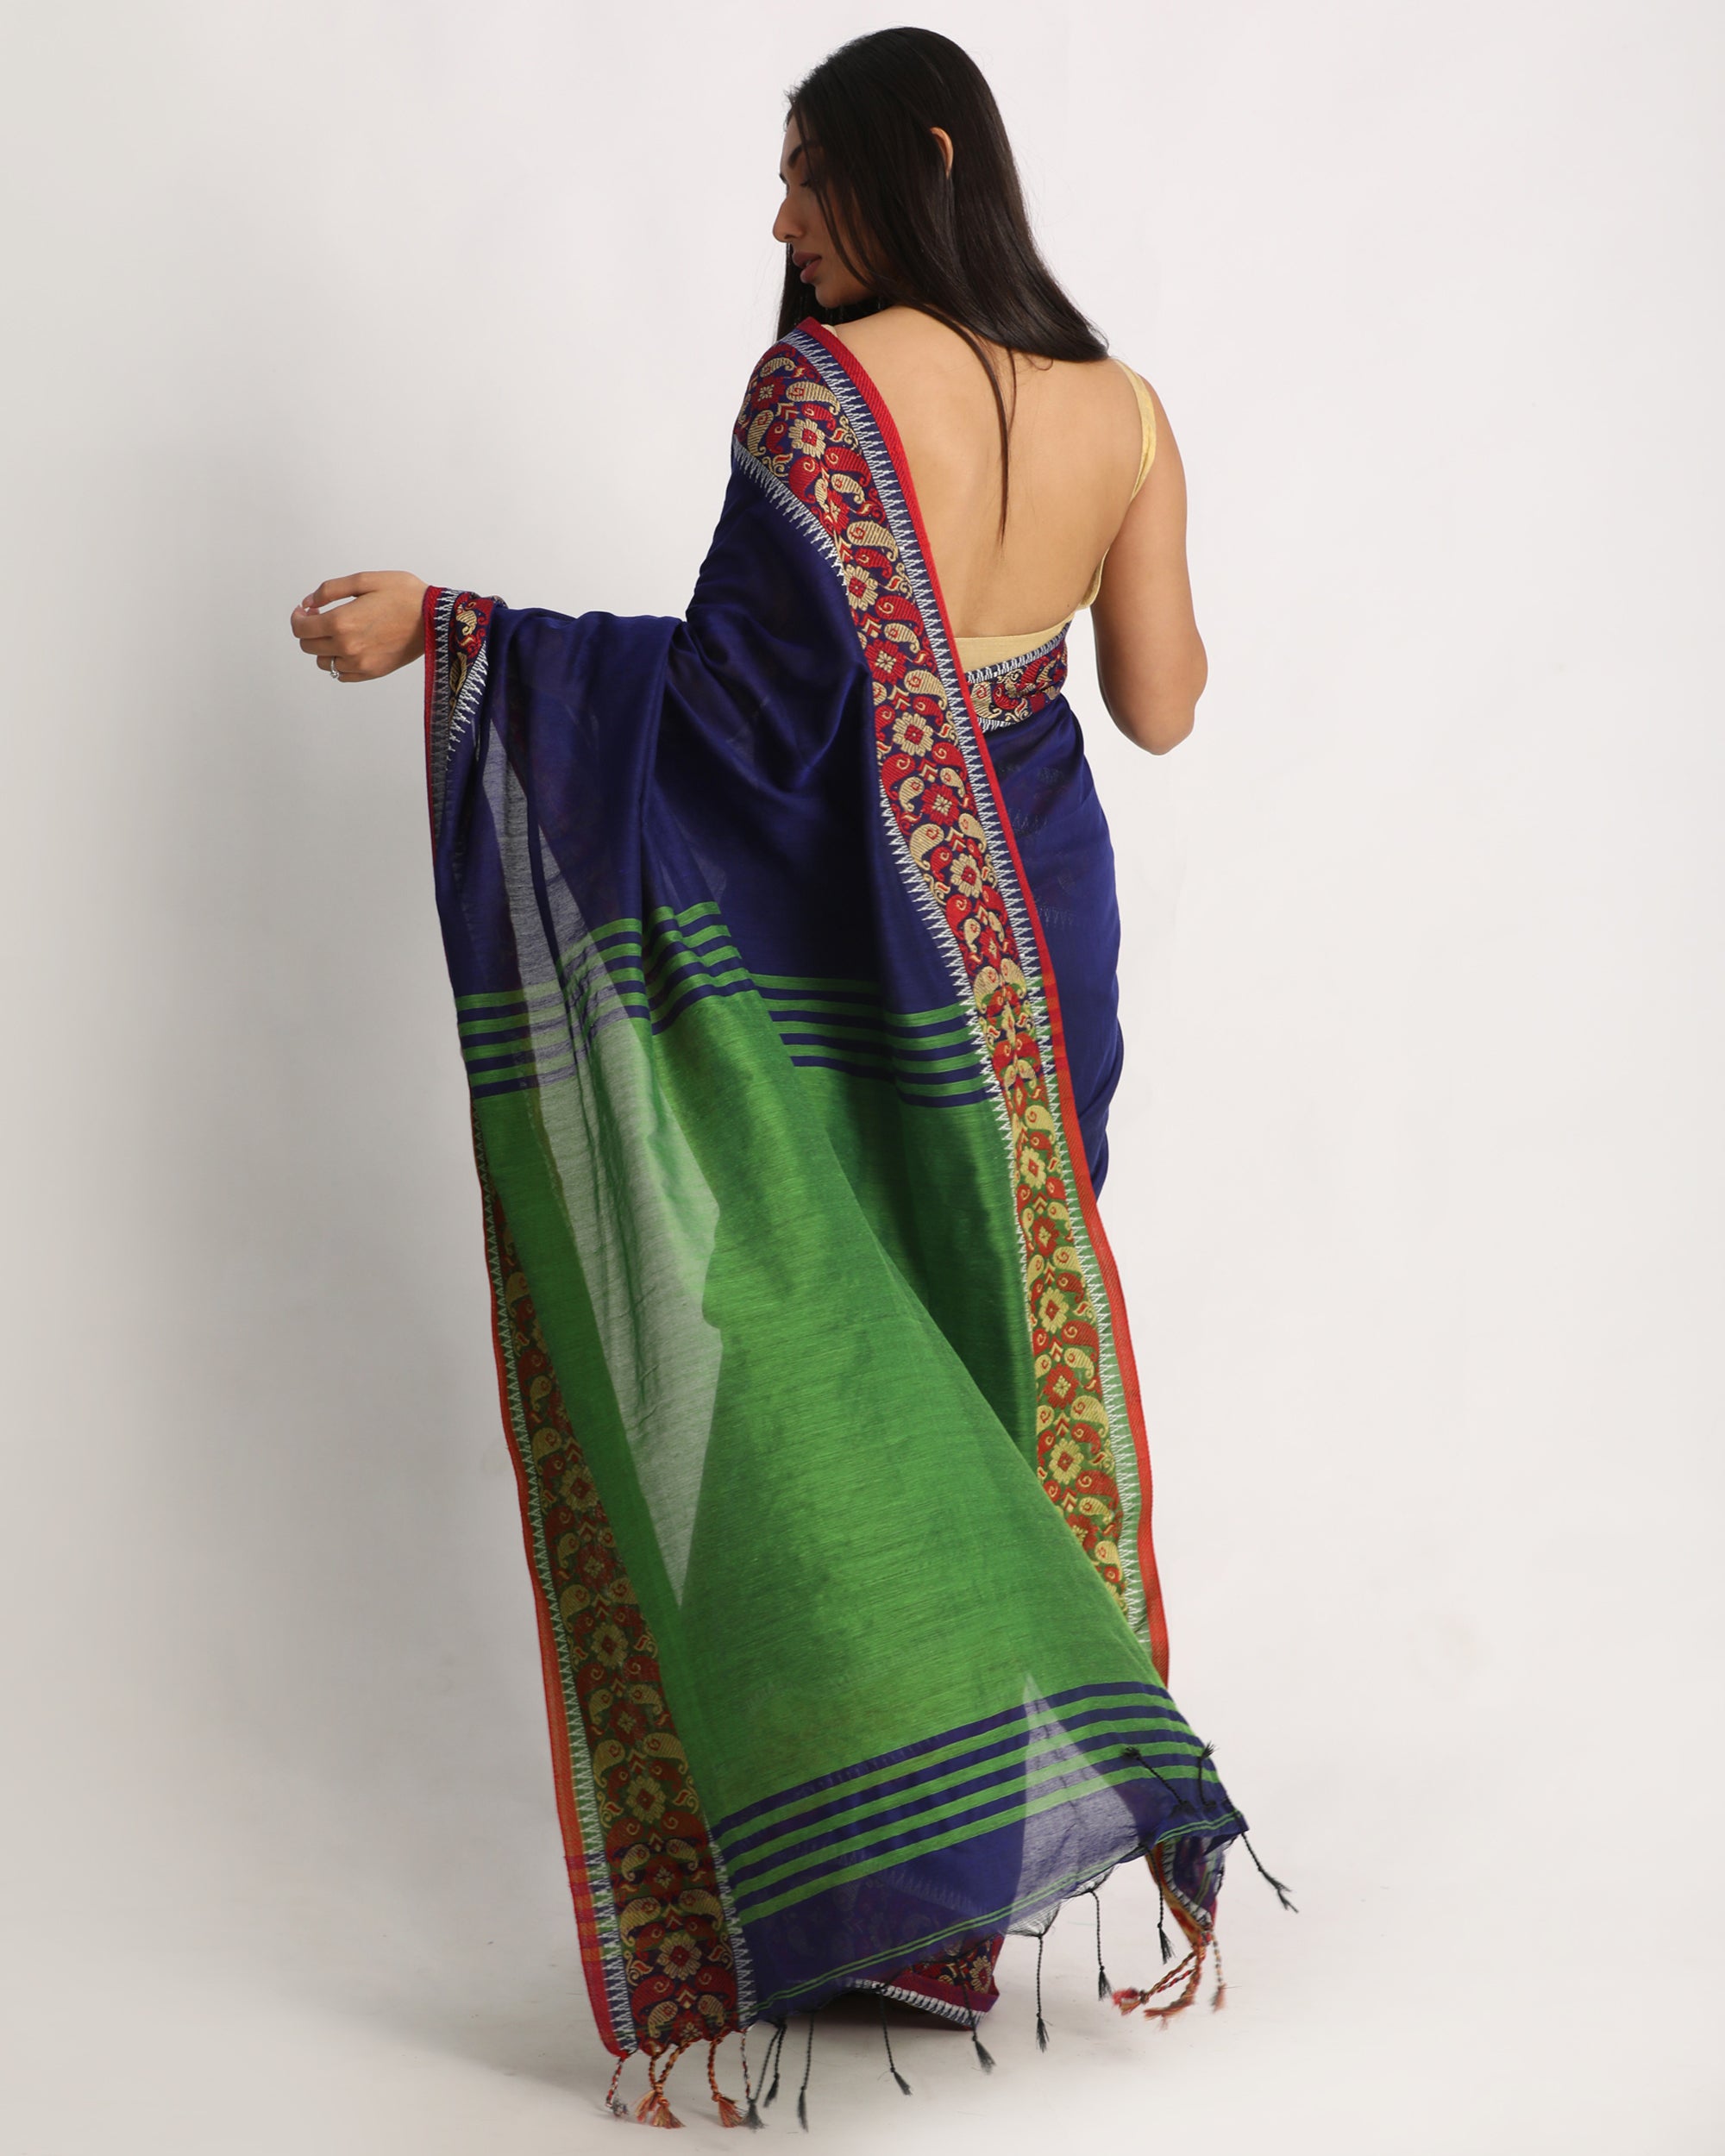 Women's Blue Handloom Handspun Cotton Saree - Piyari Fashion